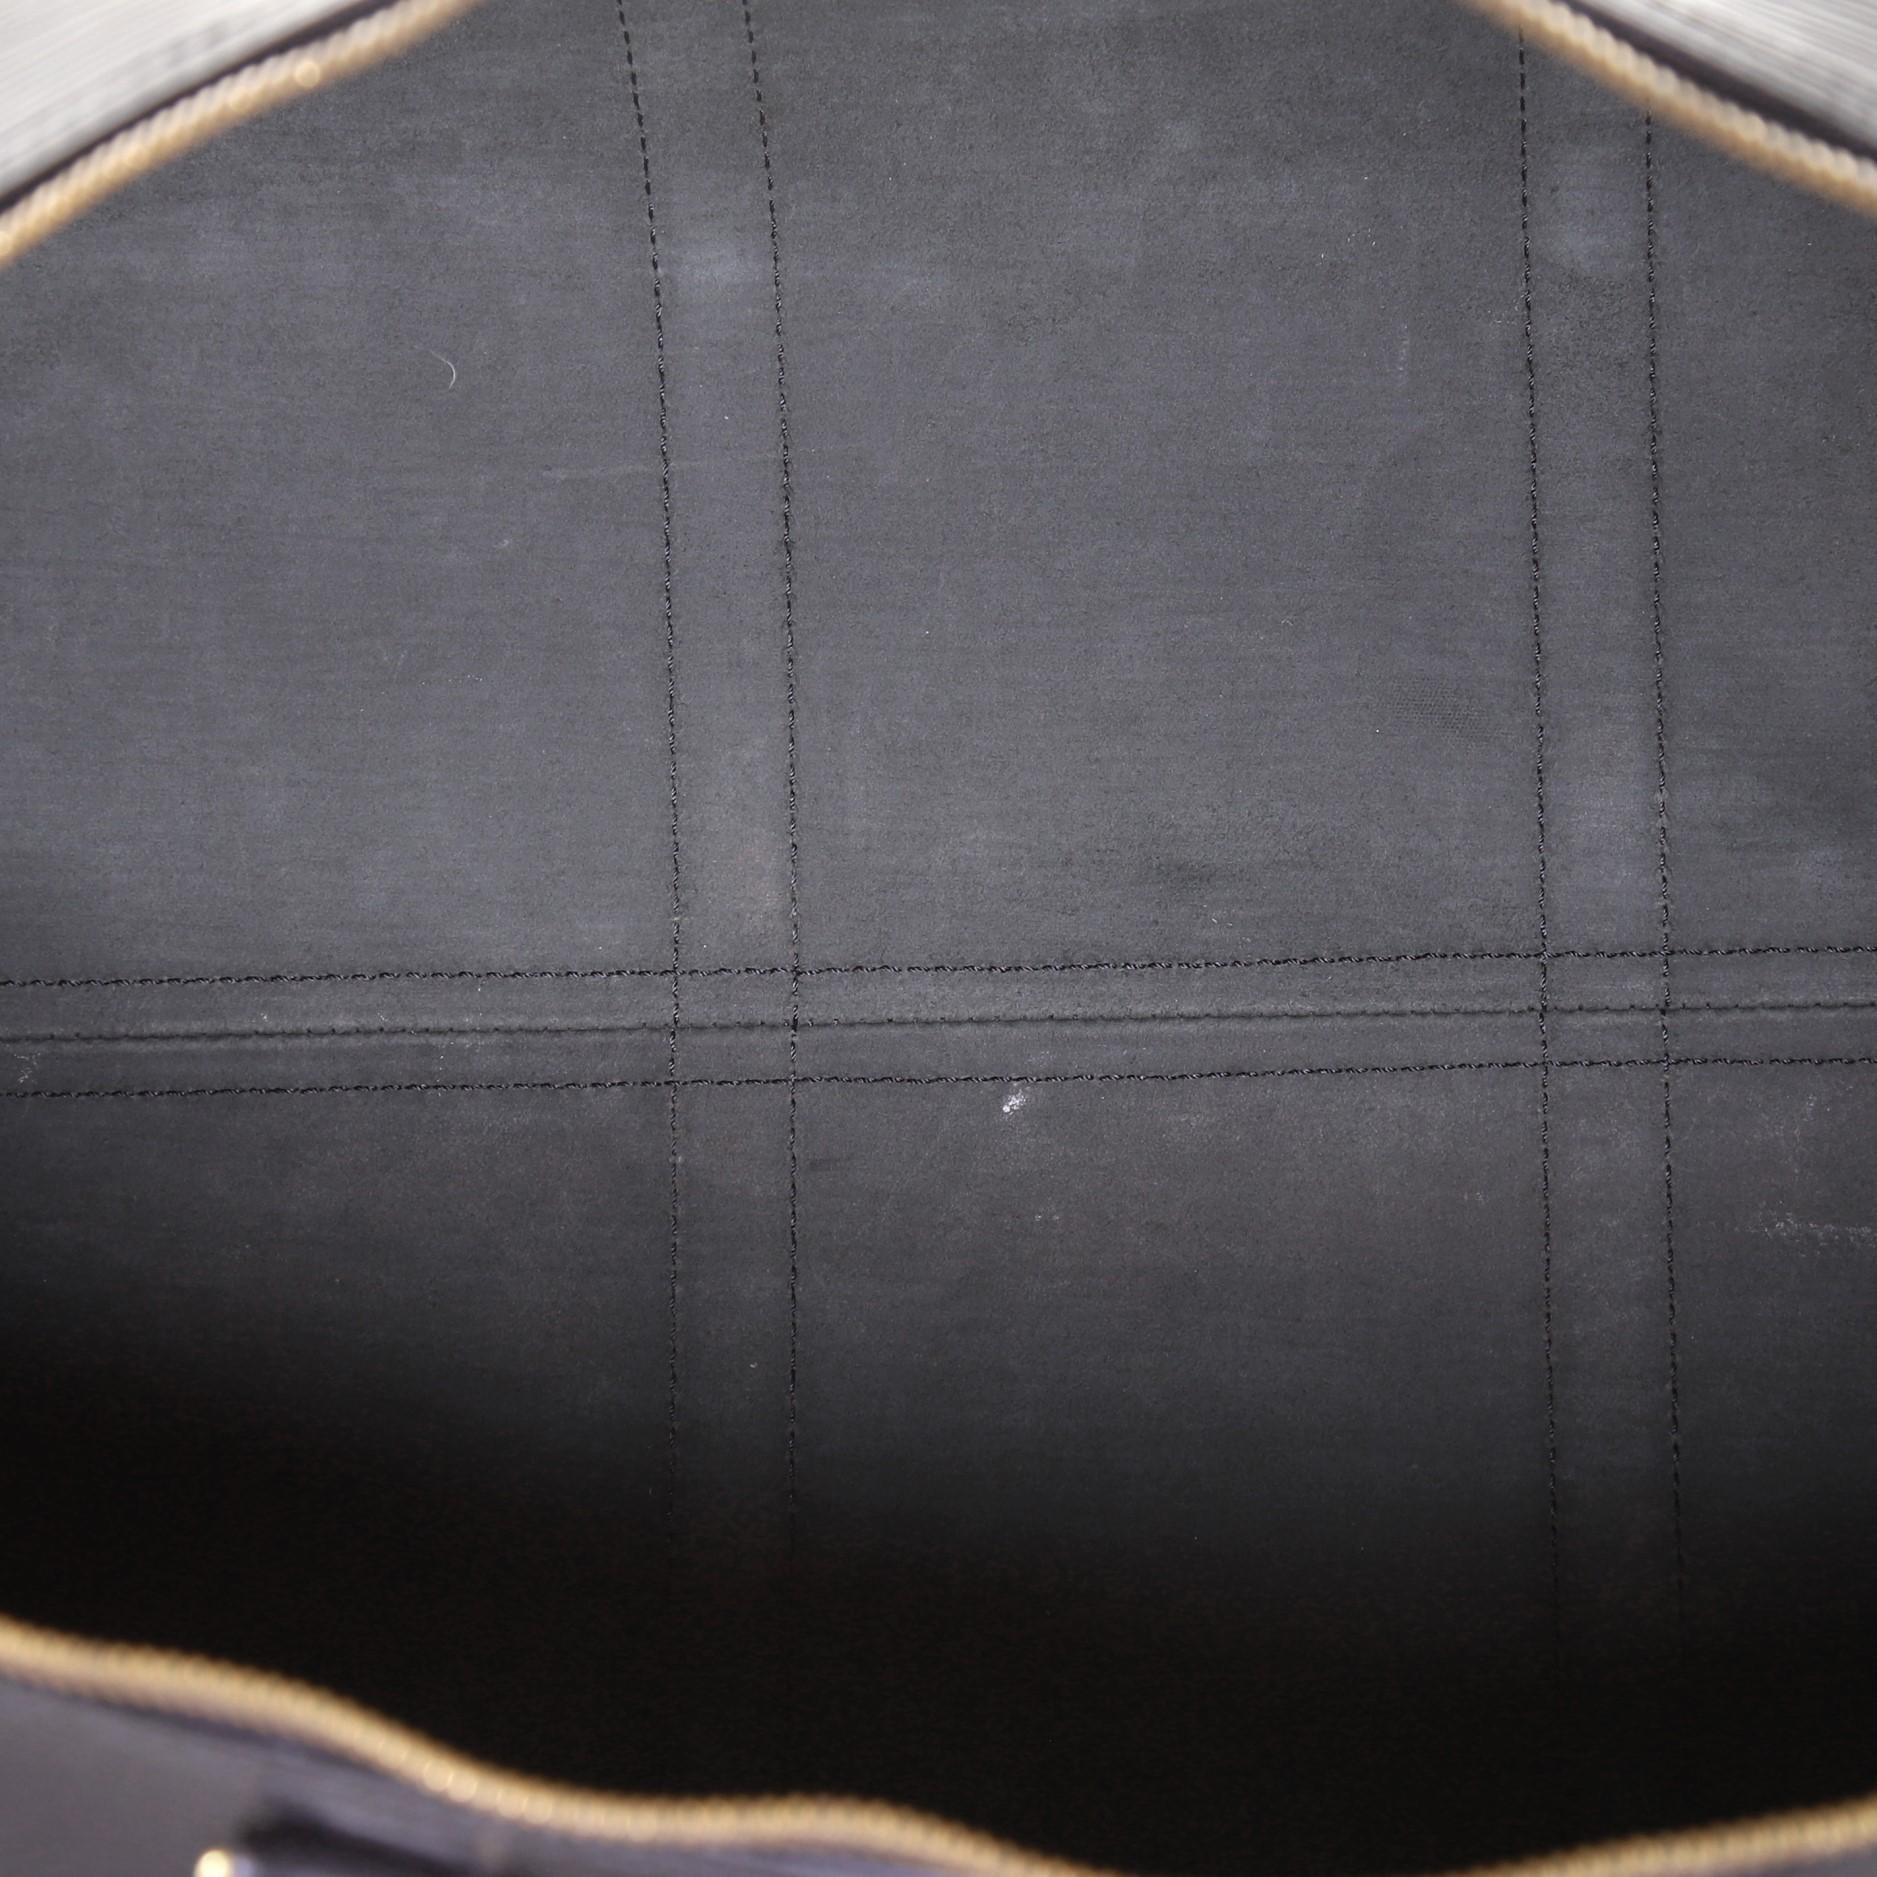 Women's or Men's Louis Vuitton Keepall Bag Epi Leather 55